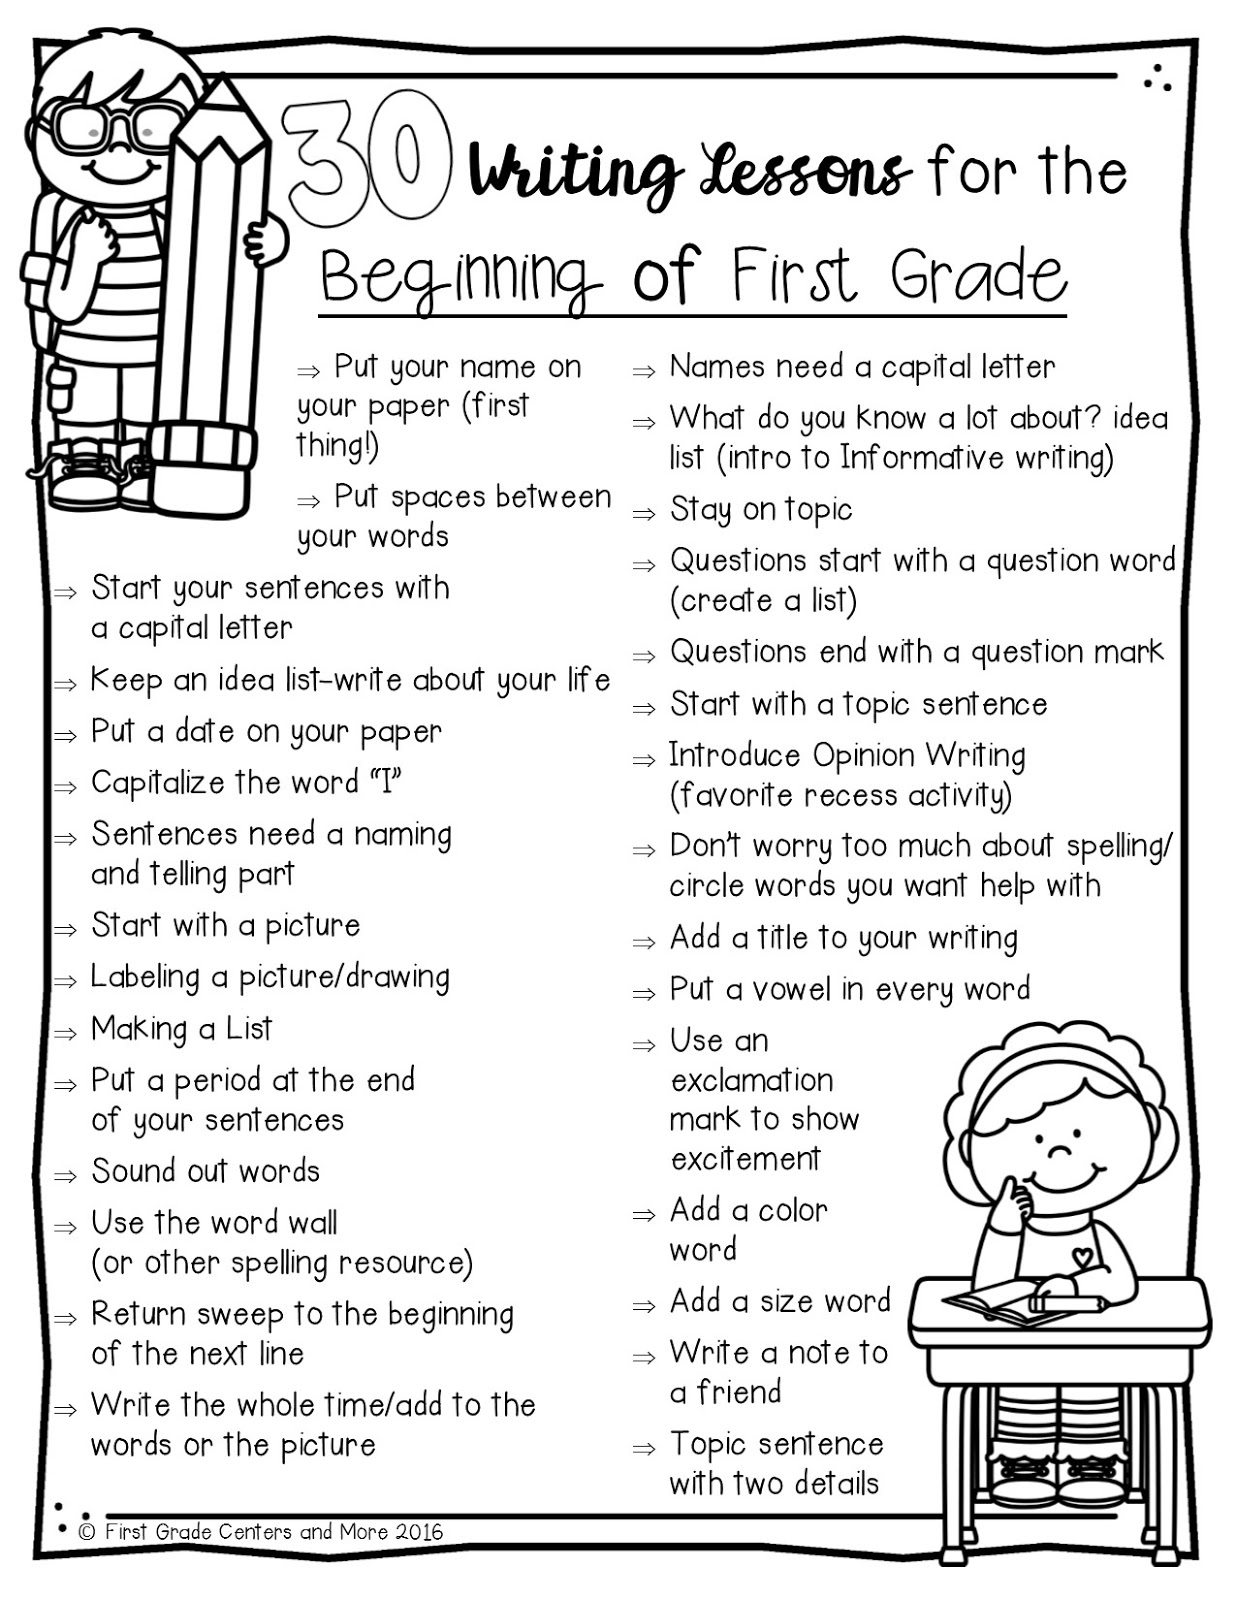 6 Tips for Teaching First Grade Writing - First Grade ...